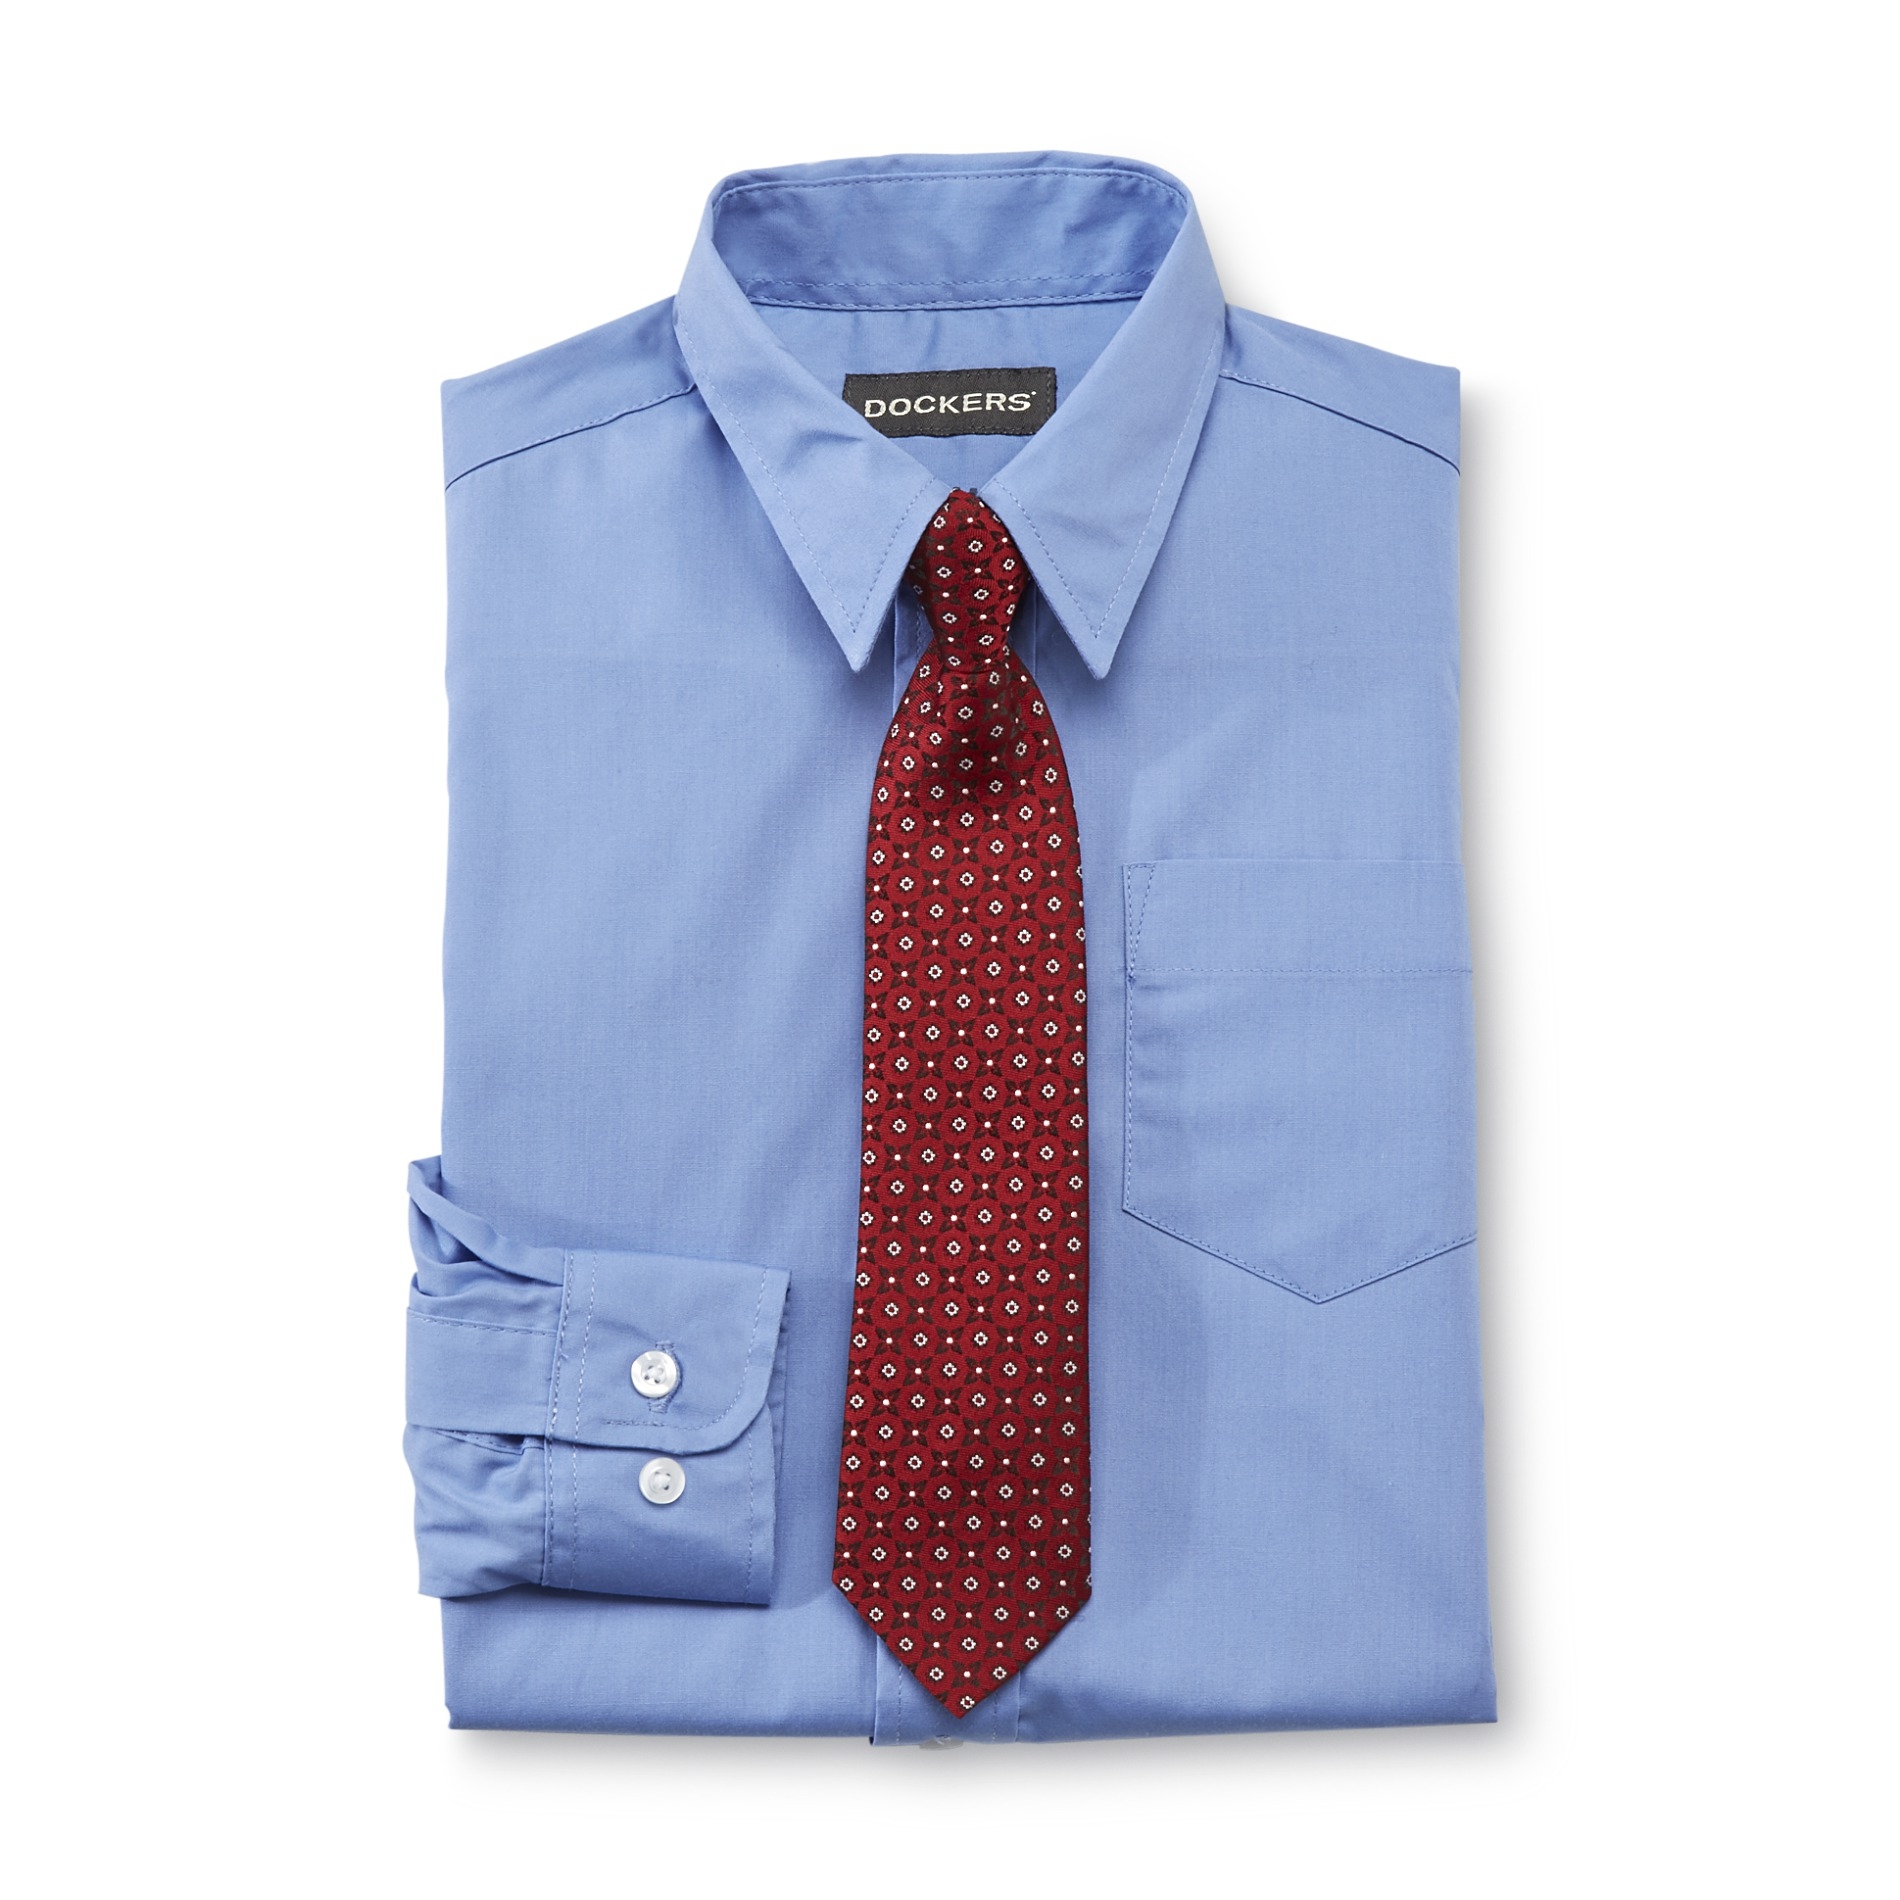 Dockers Boys' 2 Pc. Dress Shirt and Tie Set